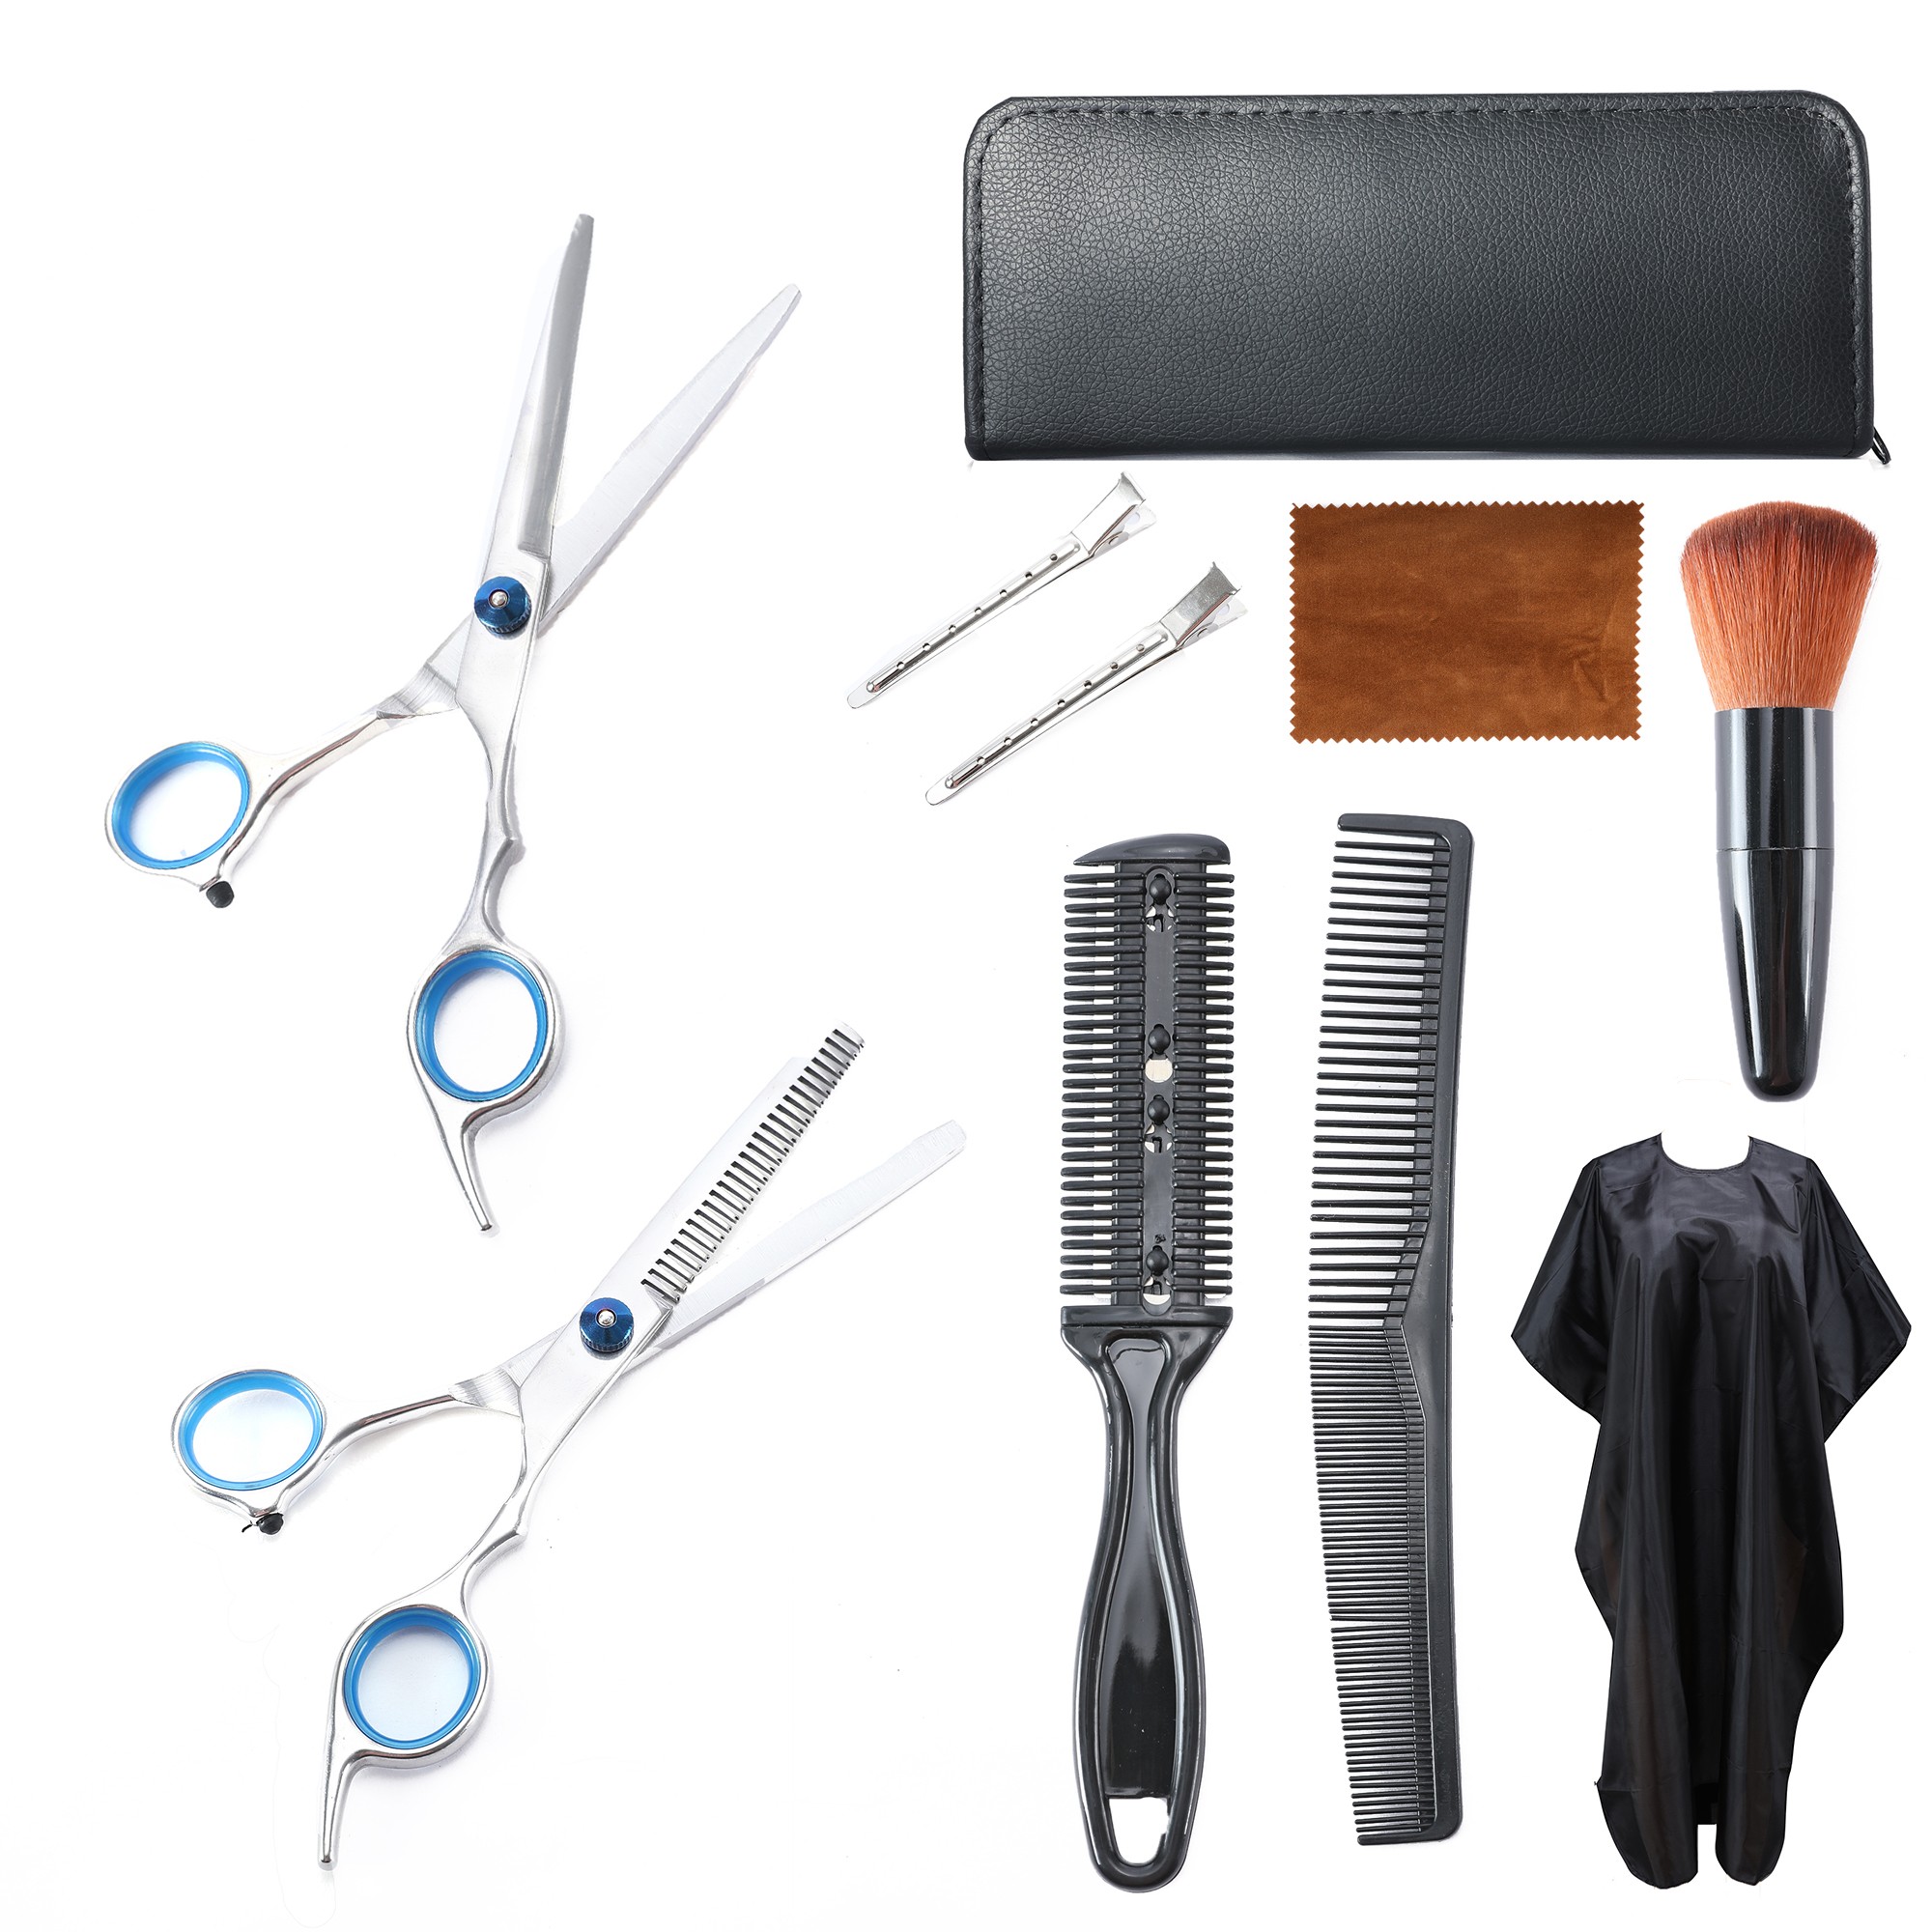 Beautyforever 10Pcs Professional Hair Cutting Scissors Kits Thinning Scissors Stainless Steel Hair Cutting Shears Set -T